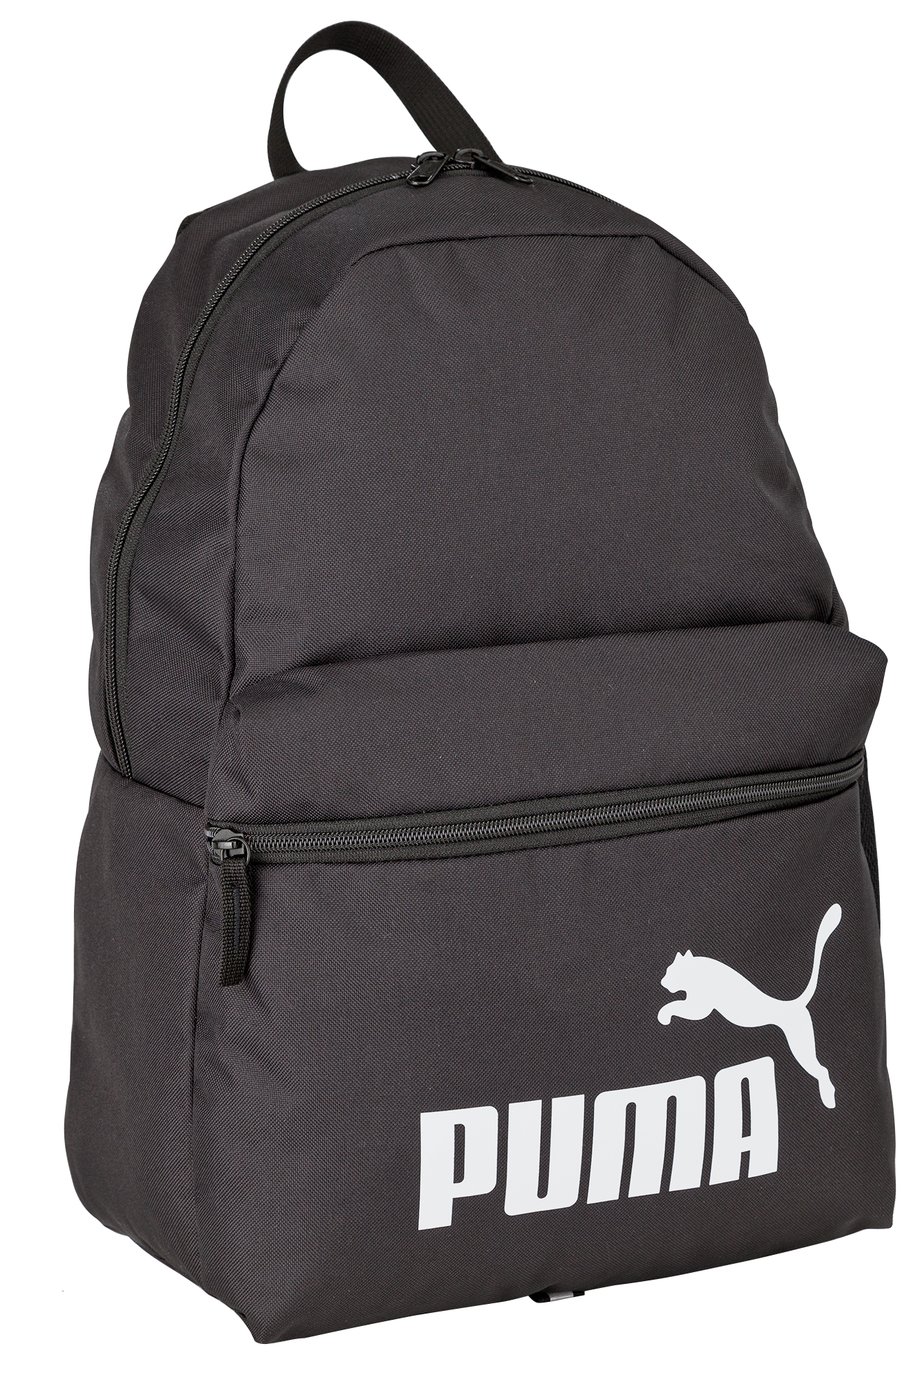 backpacks puma